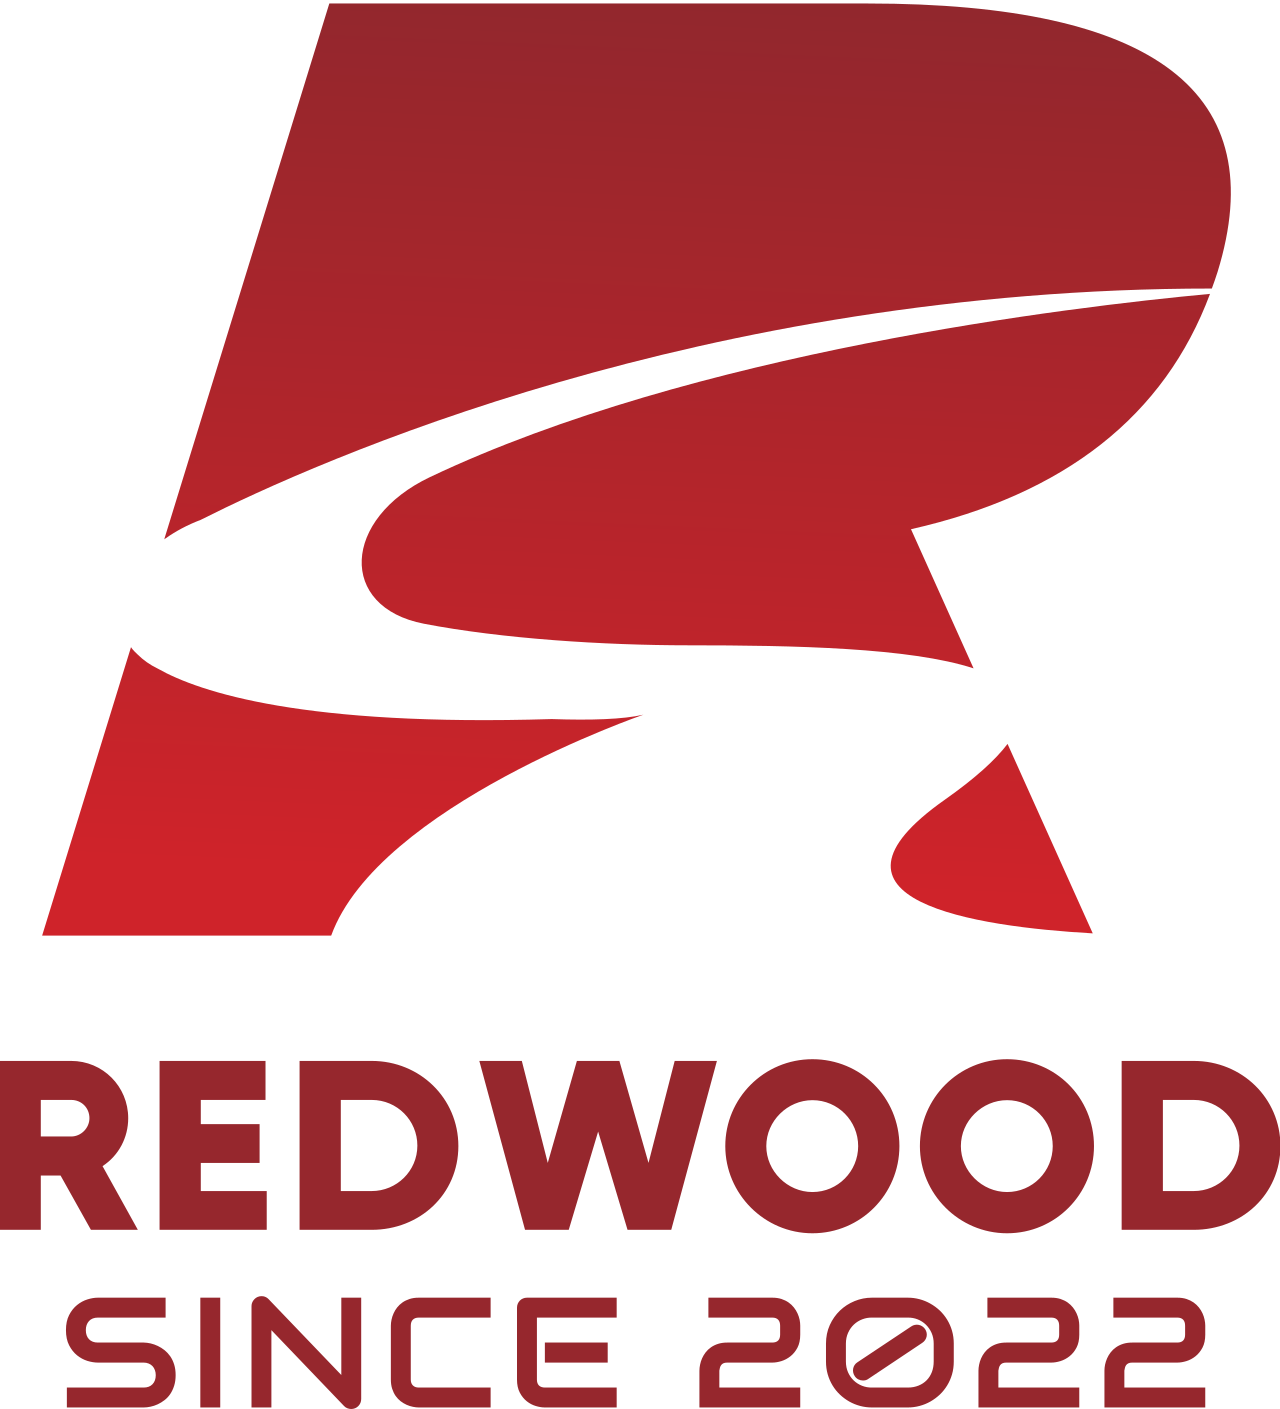 redwood's logo